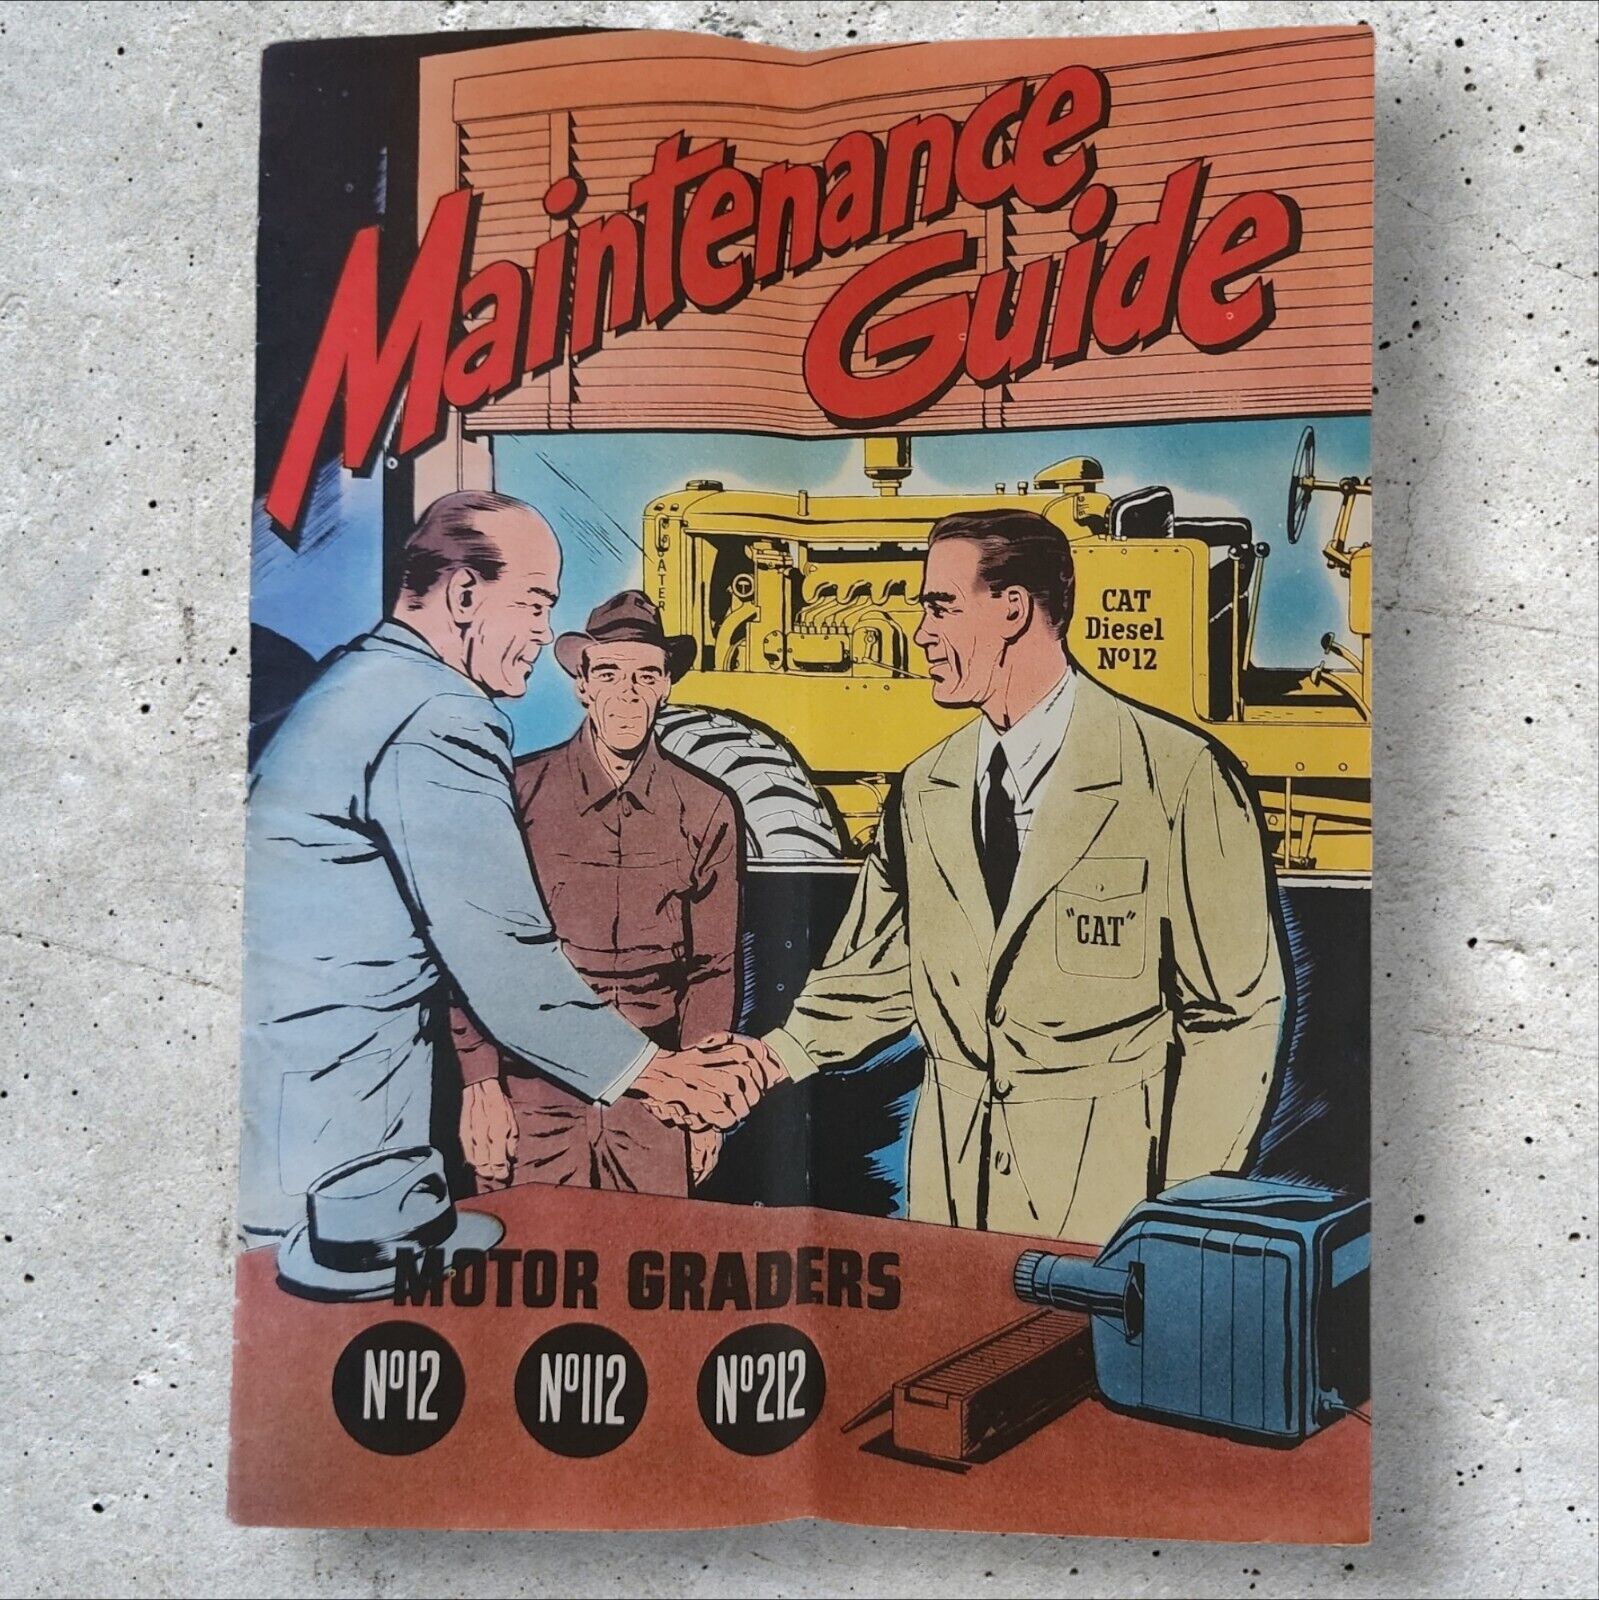 1952 CATERPILLAR MOTOR GRADERS #12 - 112 - 212  ILLUSTRATED MAINTENANCE GUIDE